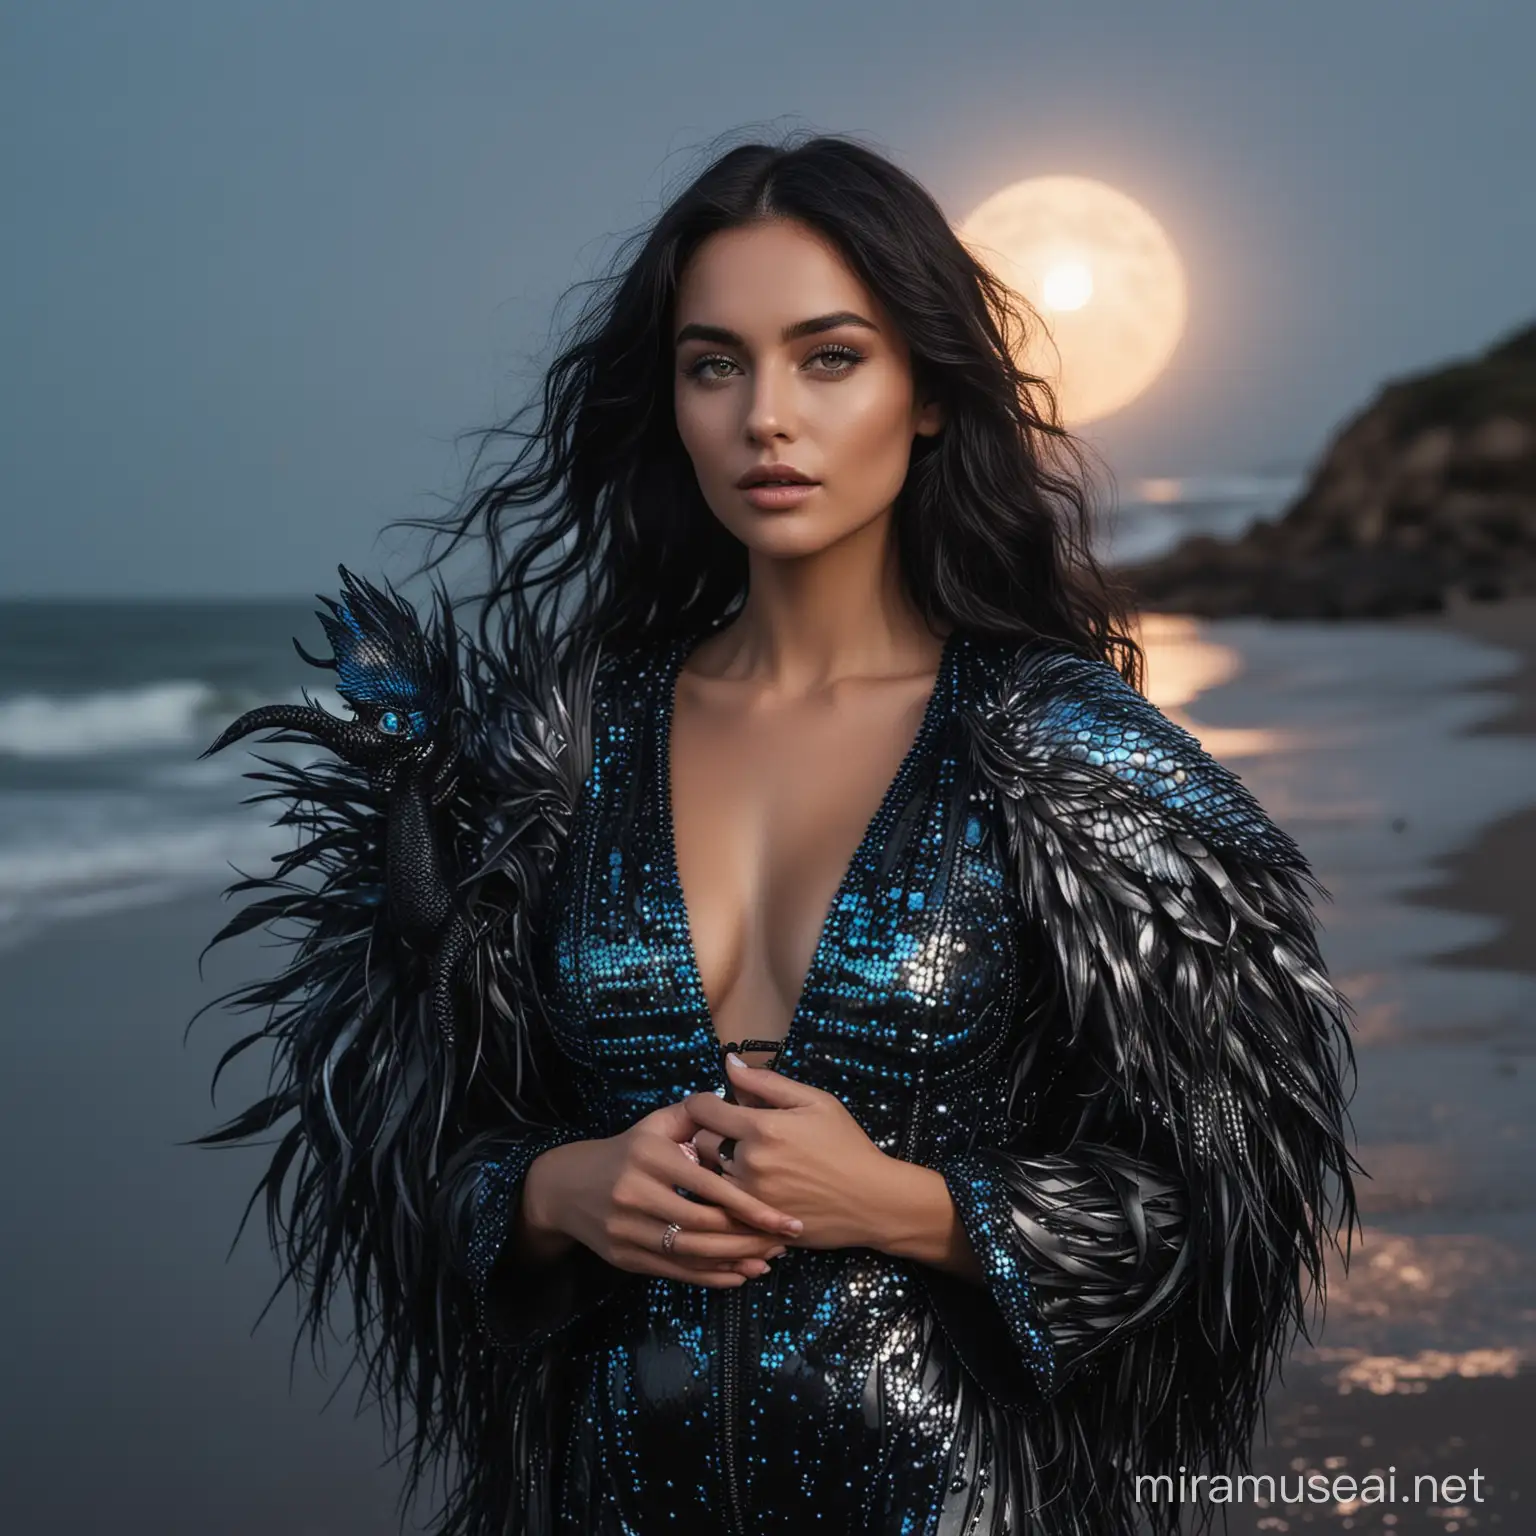 Radiant Woman with Metallic Dragon in Moonlit Beach Scene